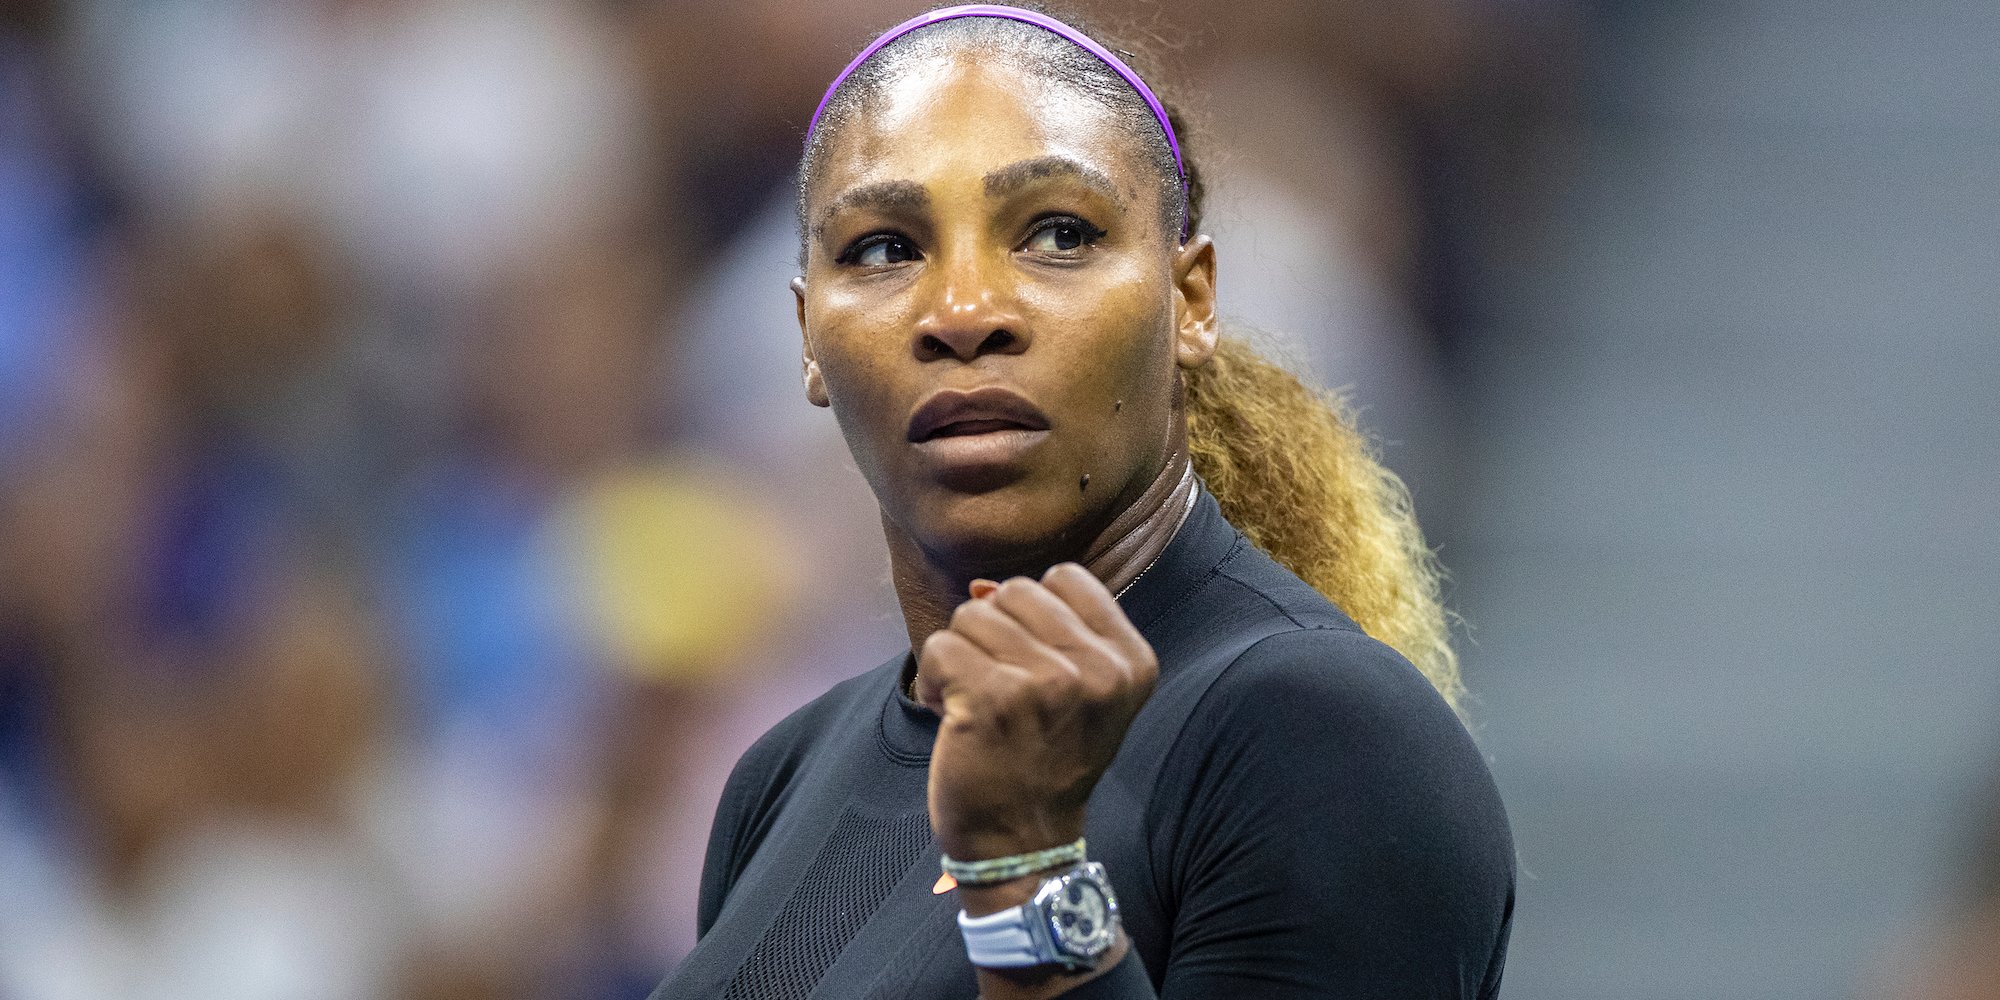 Serena Williams honoured by sports giant Nike